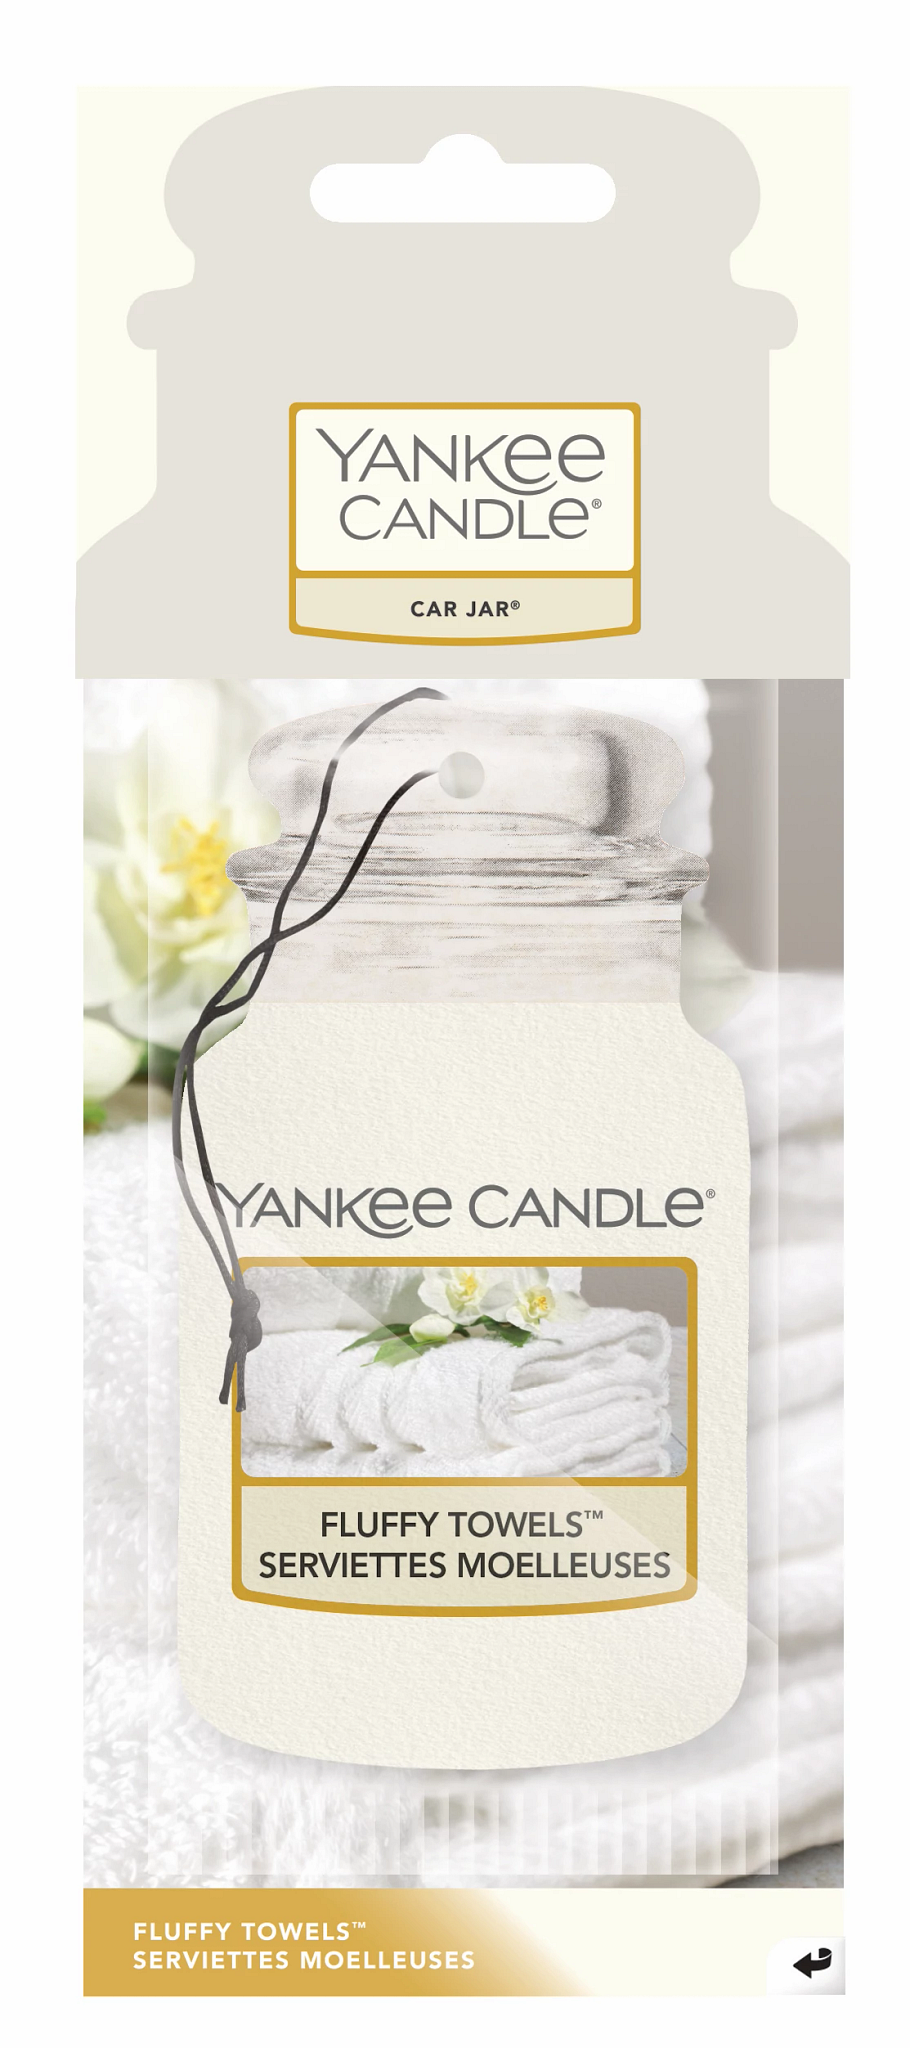 Yankee Candle - Diffusore con bastoncini profumati Fluffy Towels